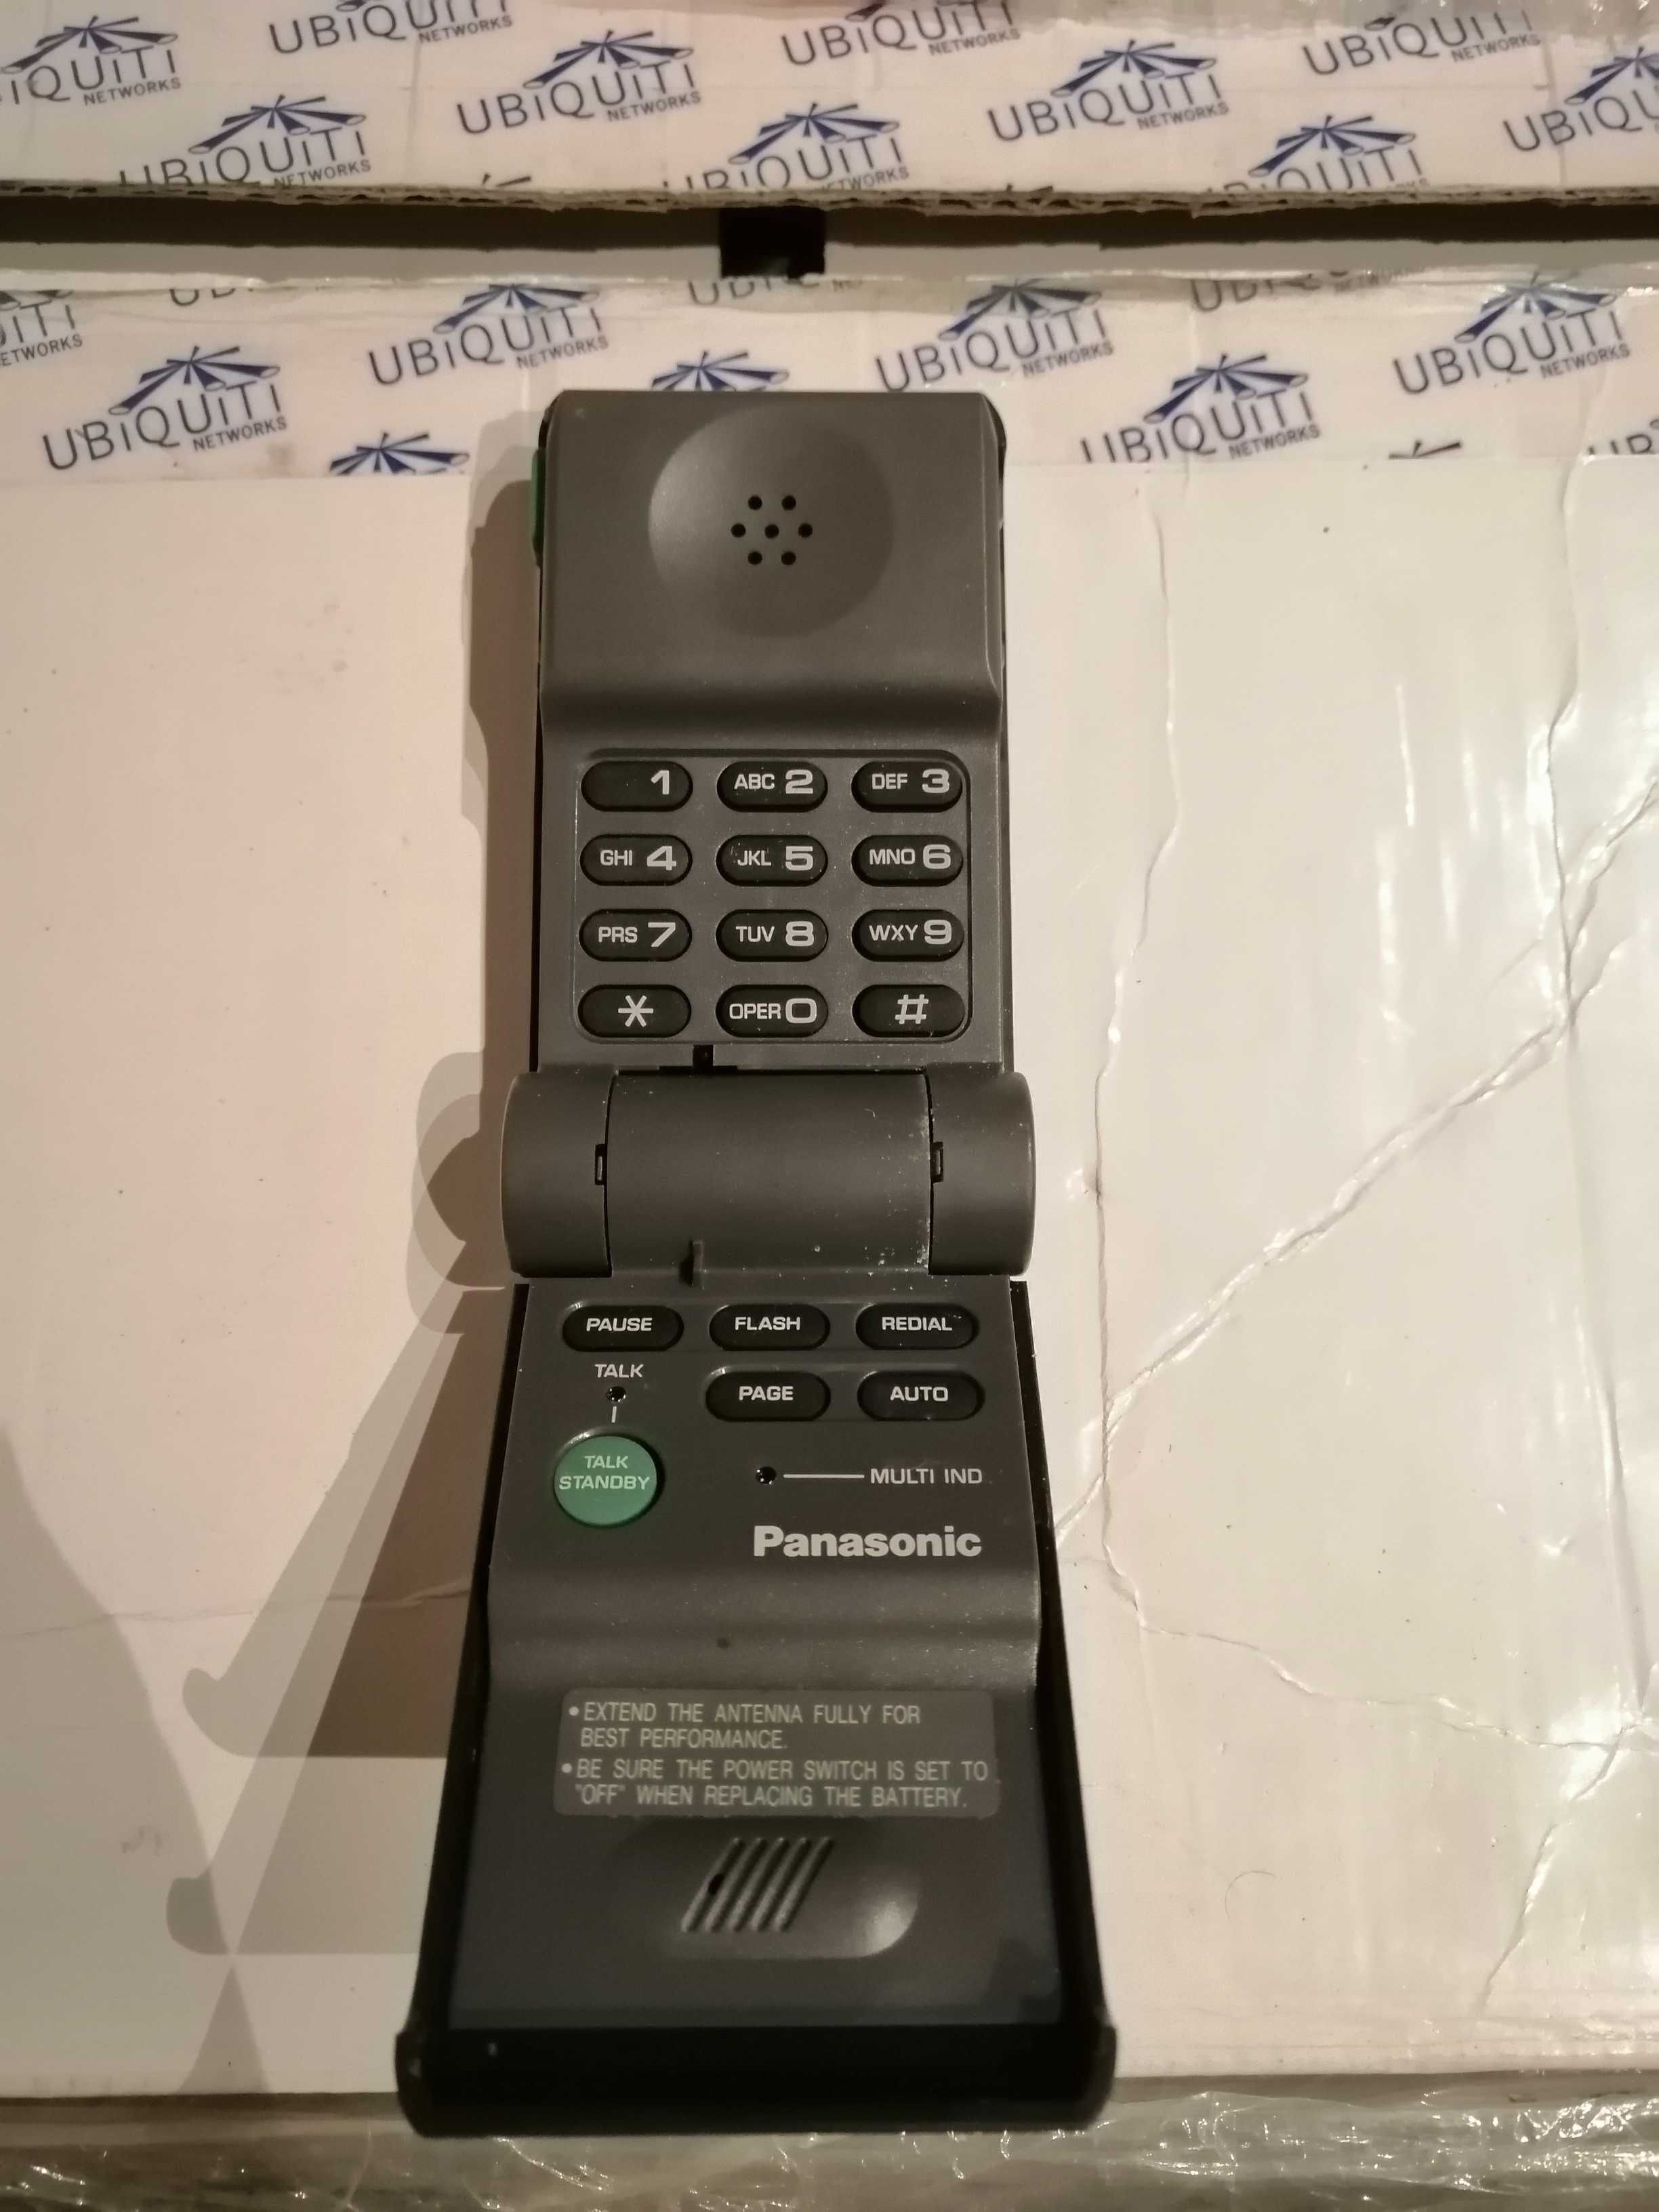 telefon Panasonic Easa-Phone KX-T3000R Pocket